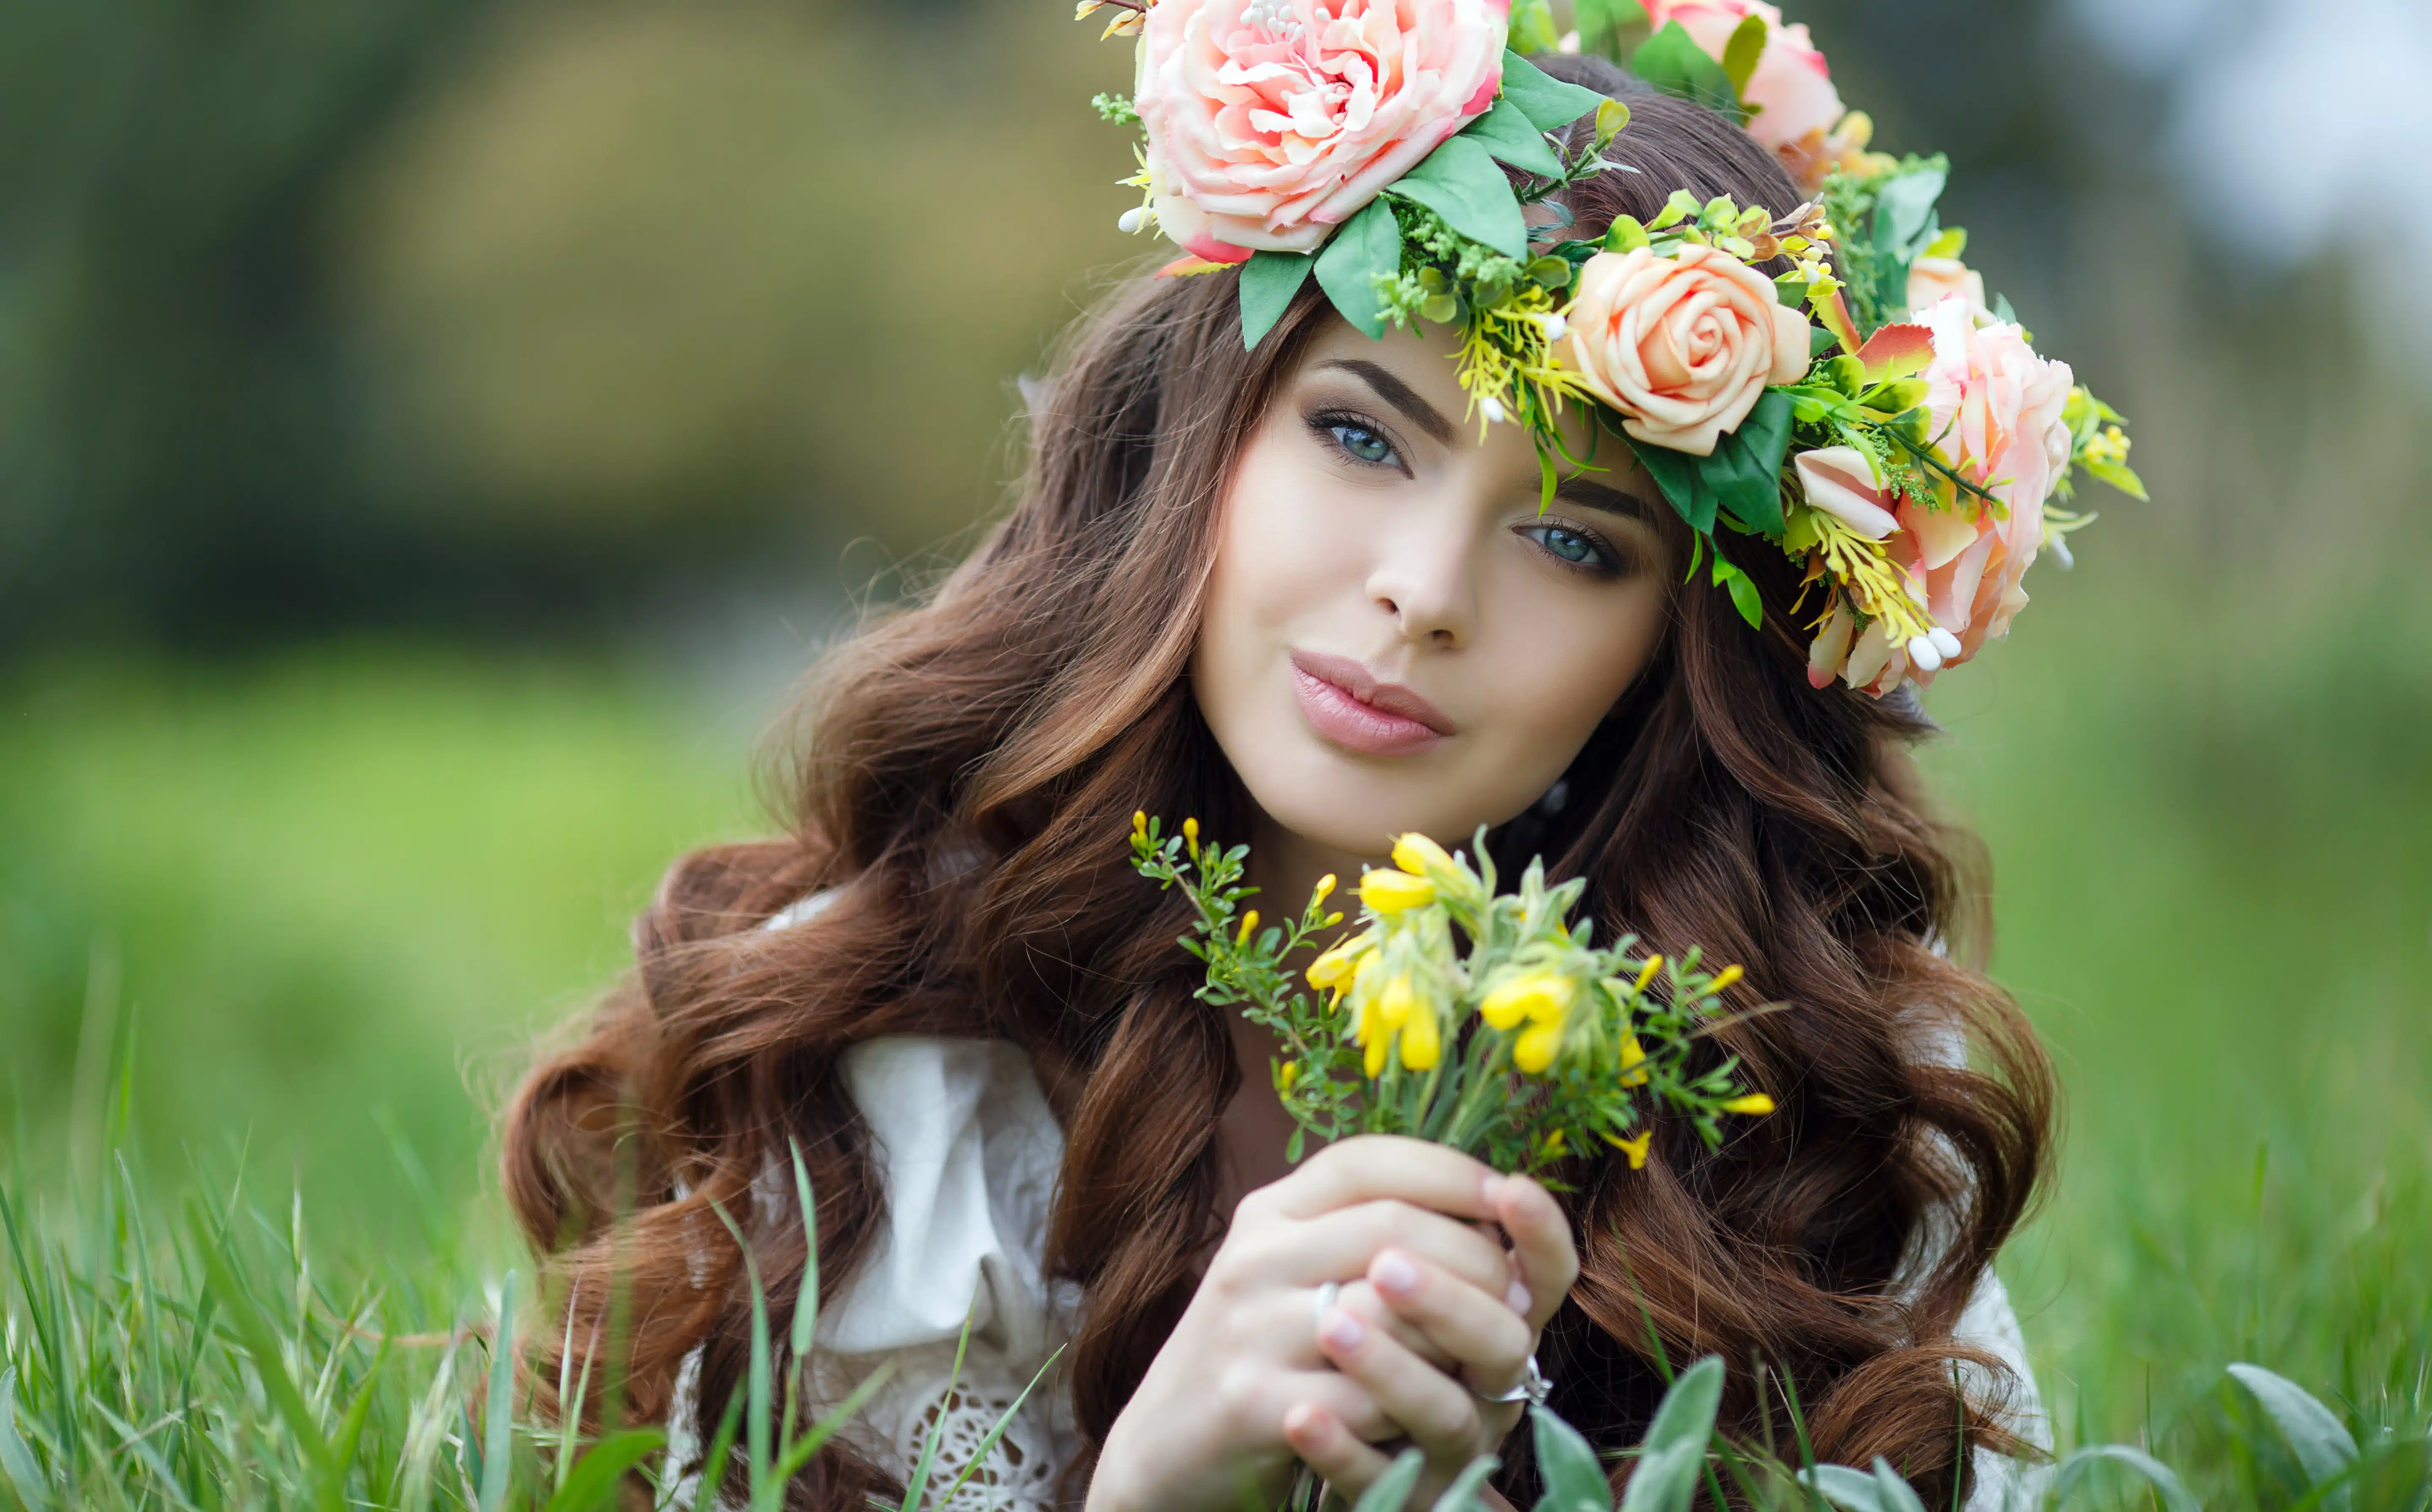 beautiful woman in wreath of flowers outdoor